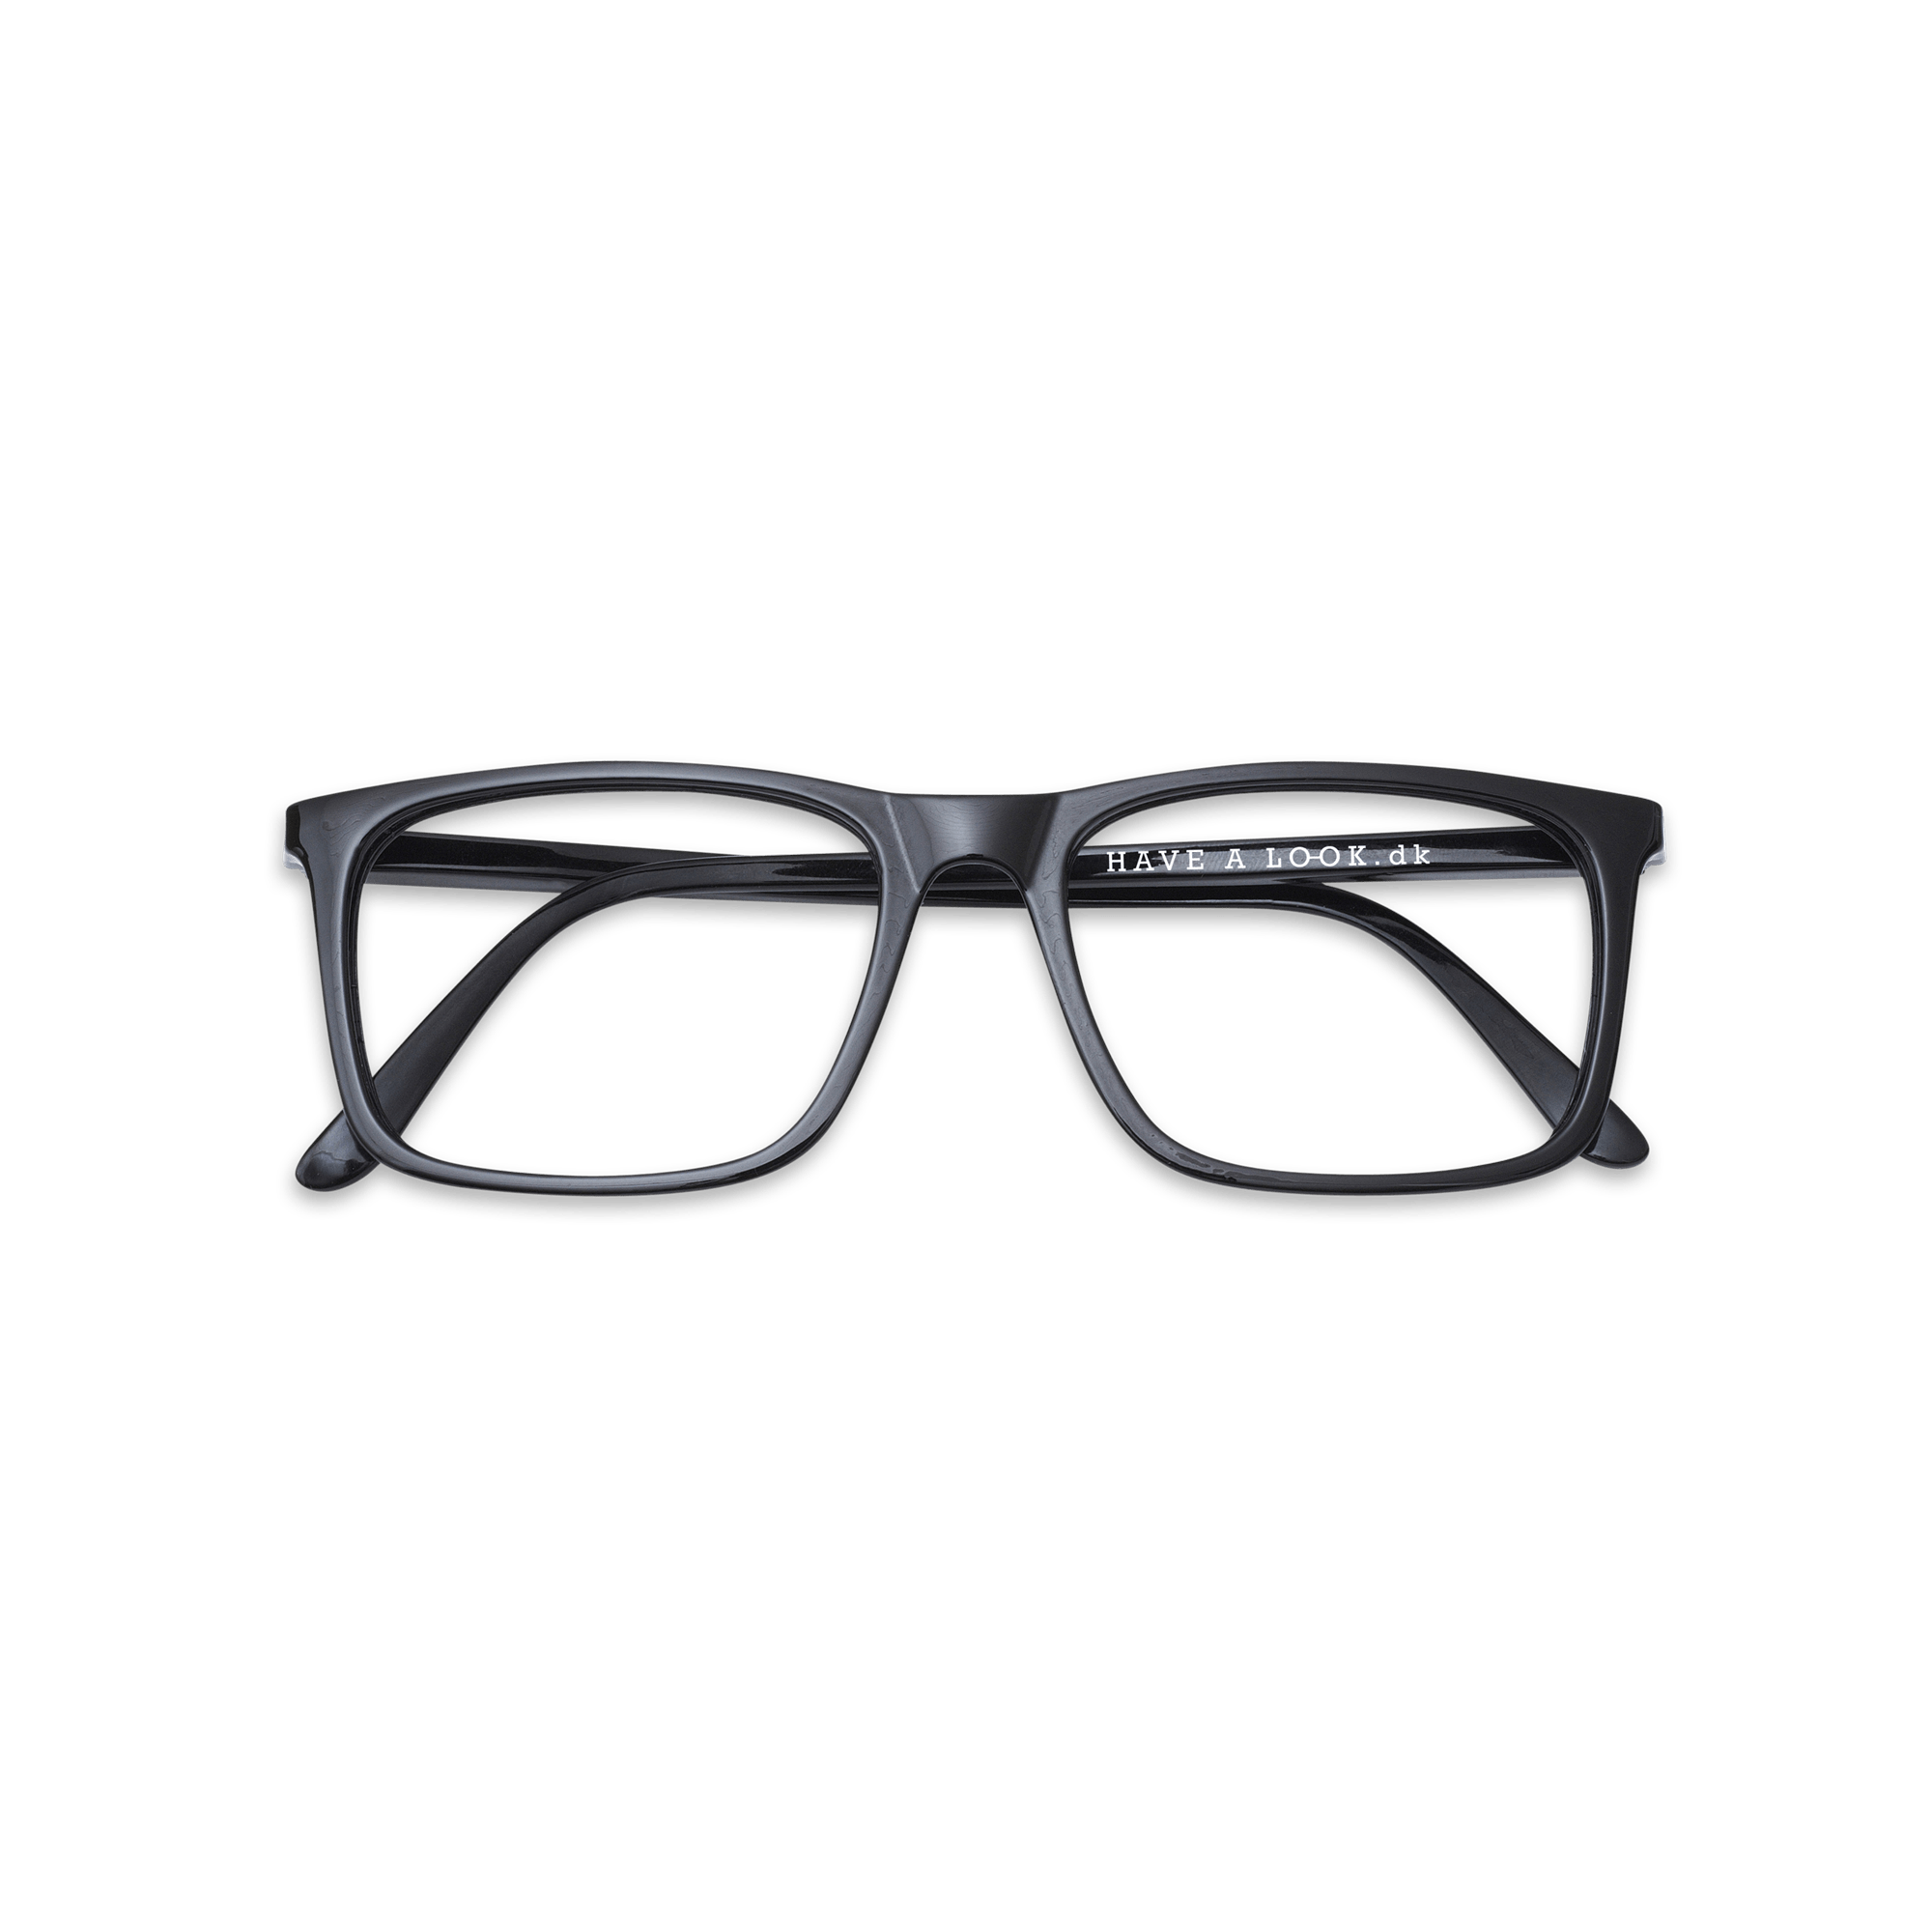 Minus glasses Type A - black